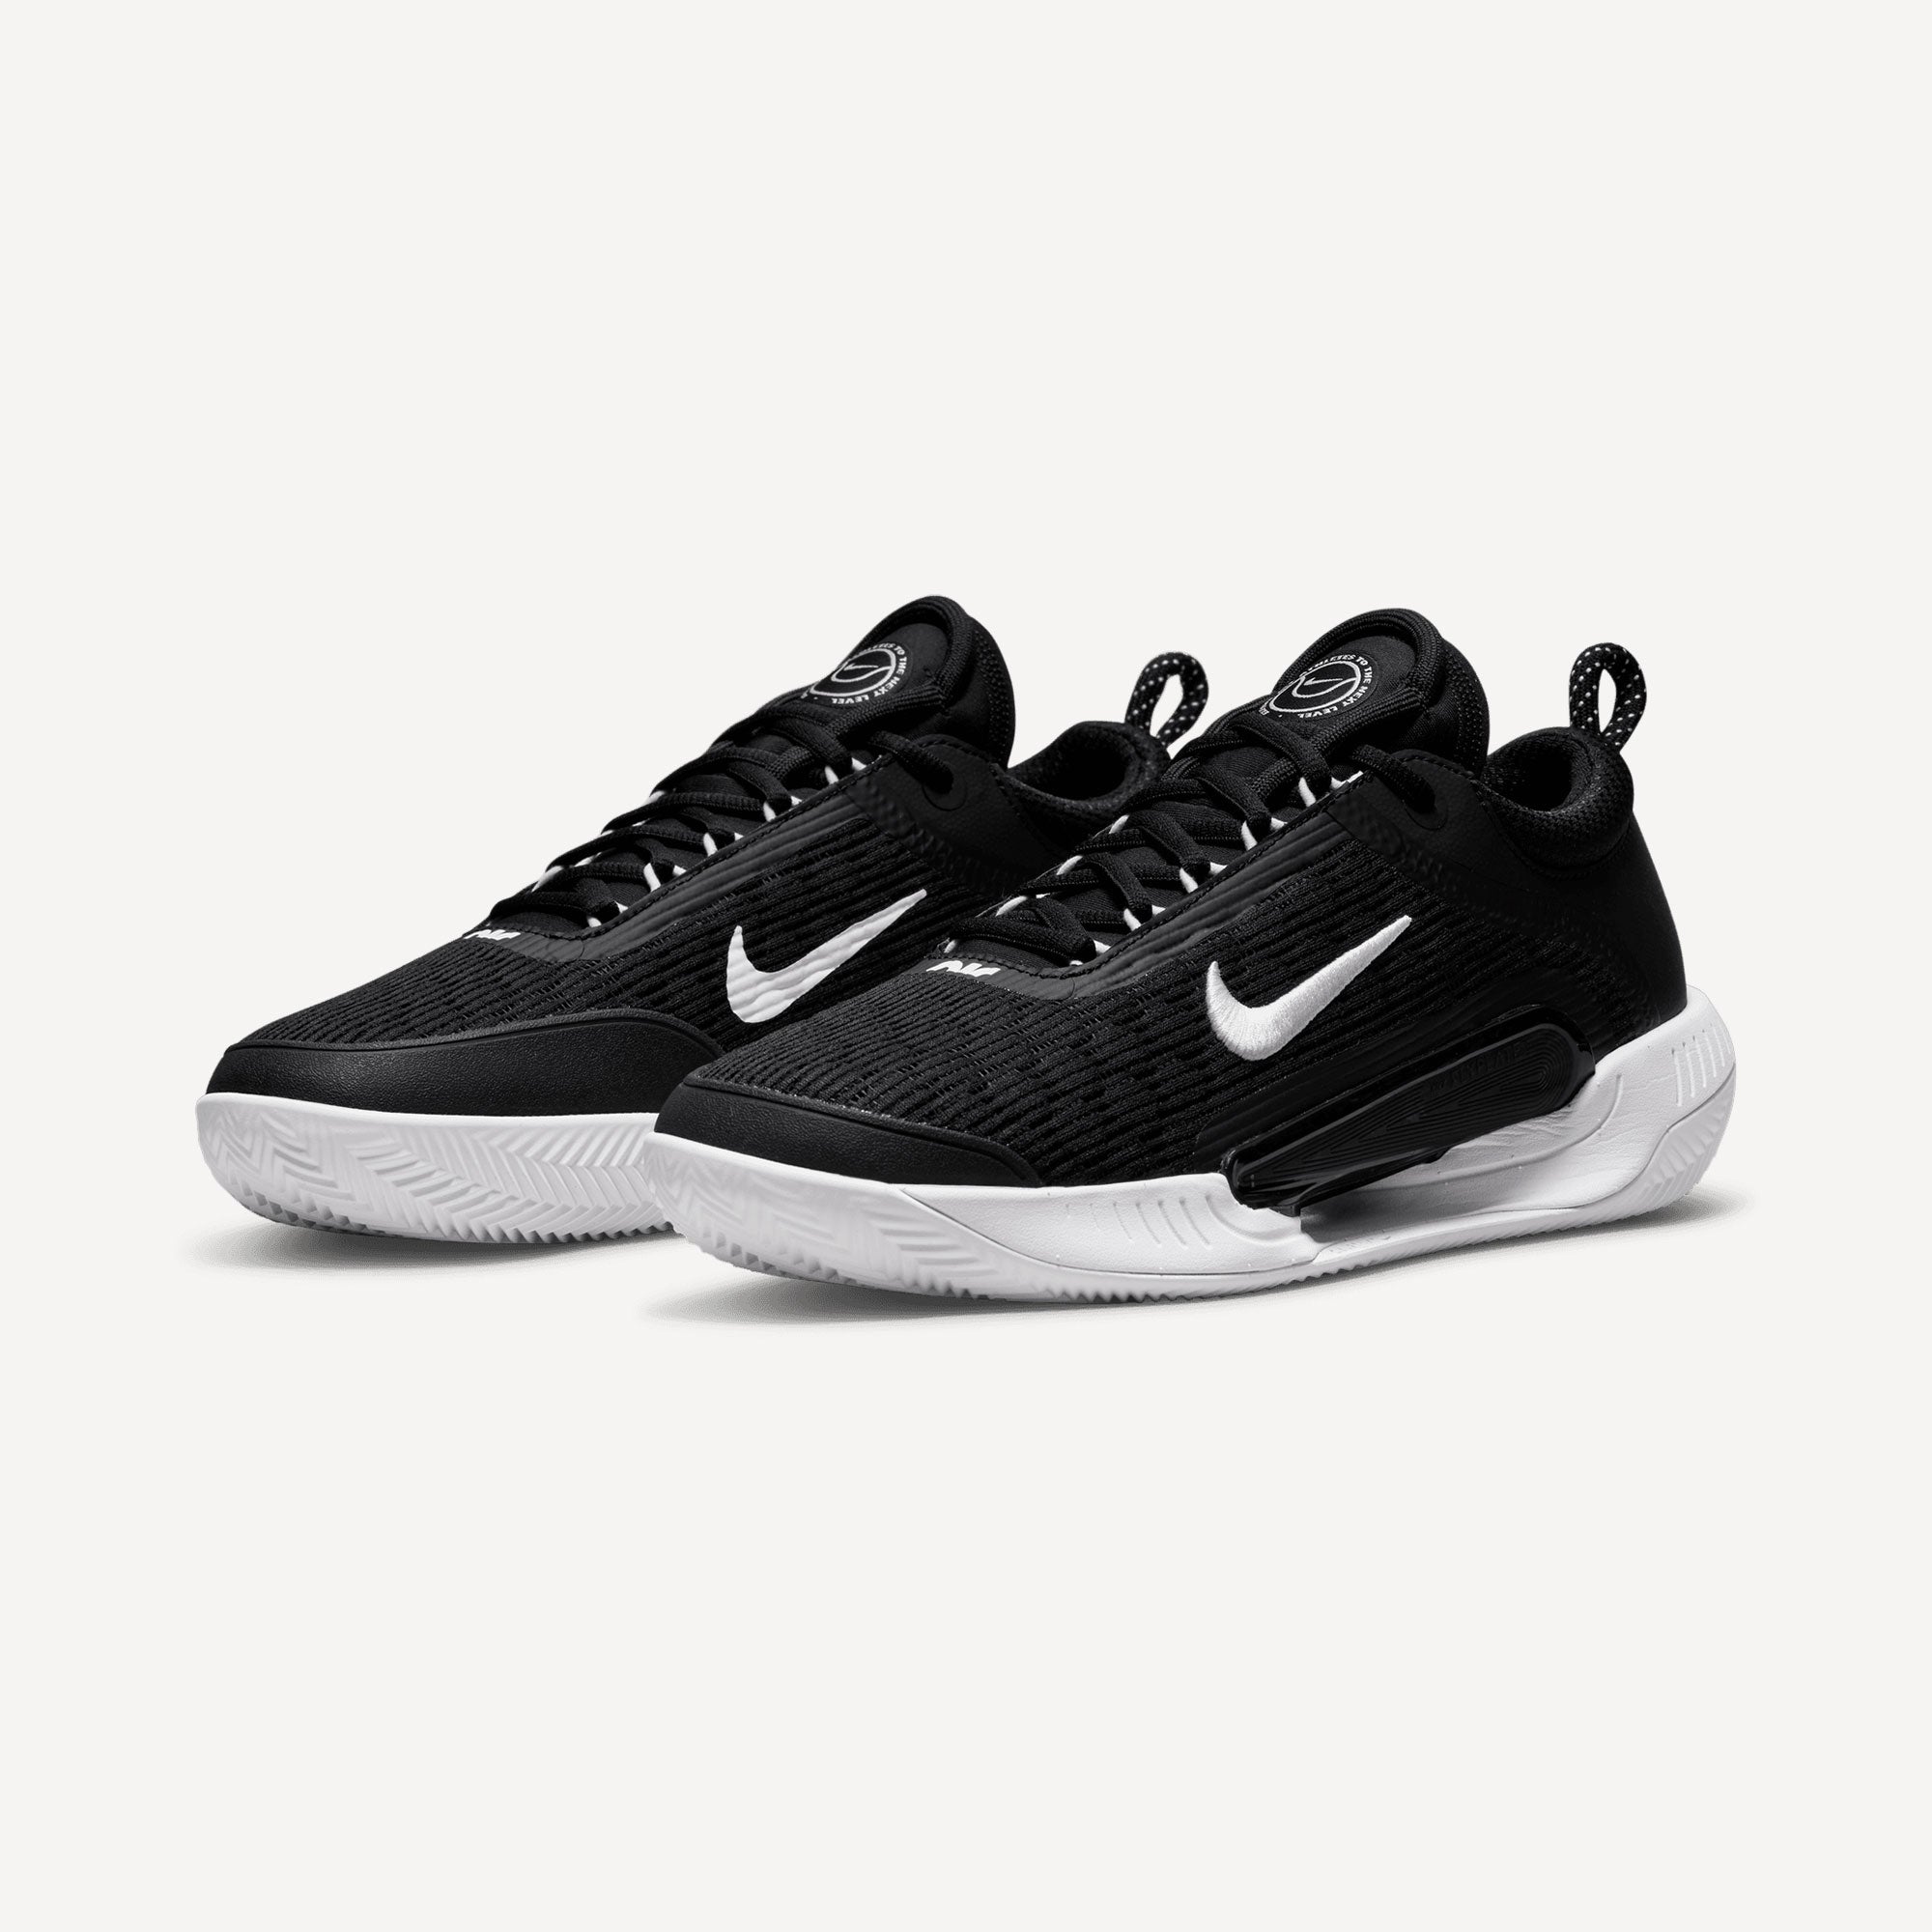 NikeCourt Zoom NXT Men's Clay Court Tennis Shoes Black (4)